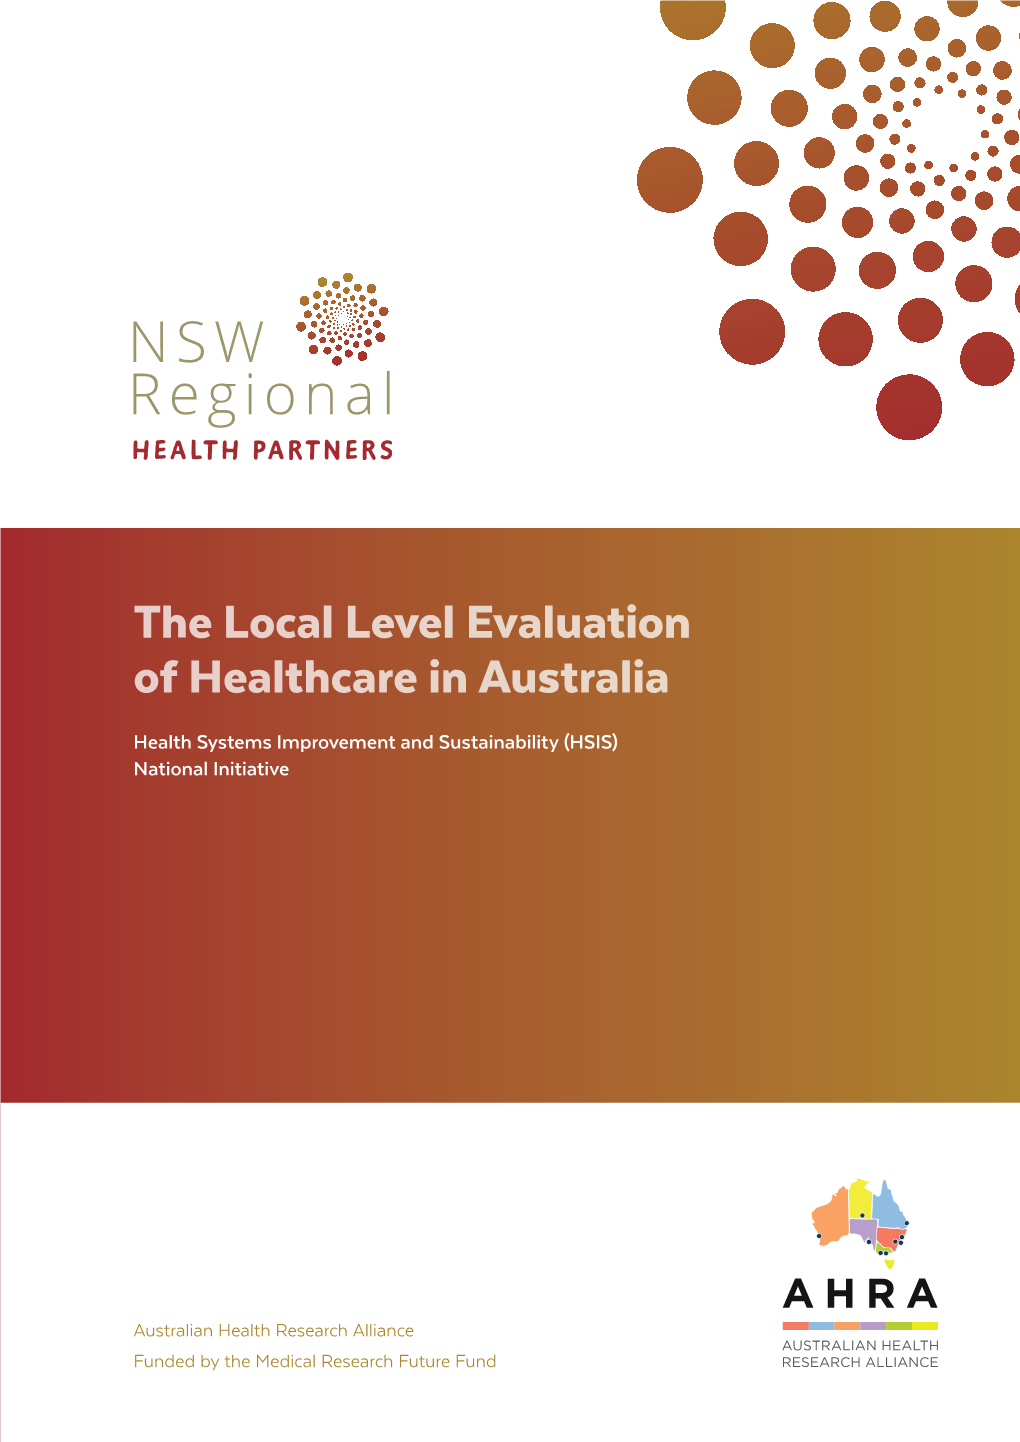 The Local Level Evaluation of Healthcare in Australia